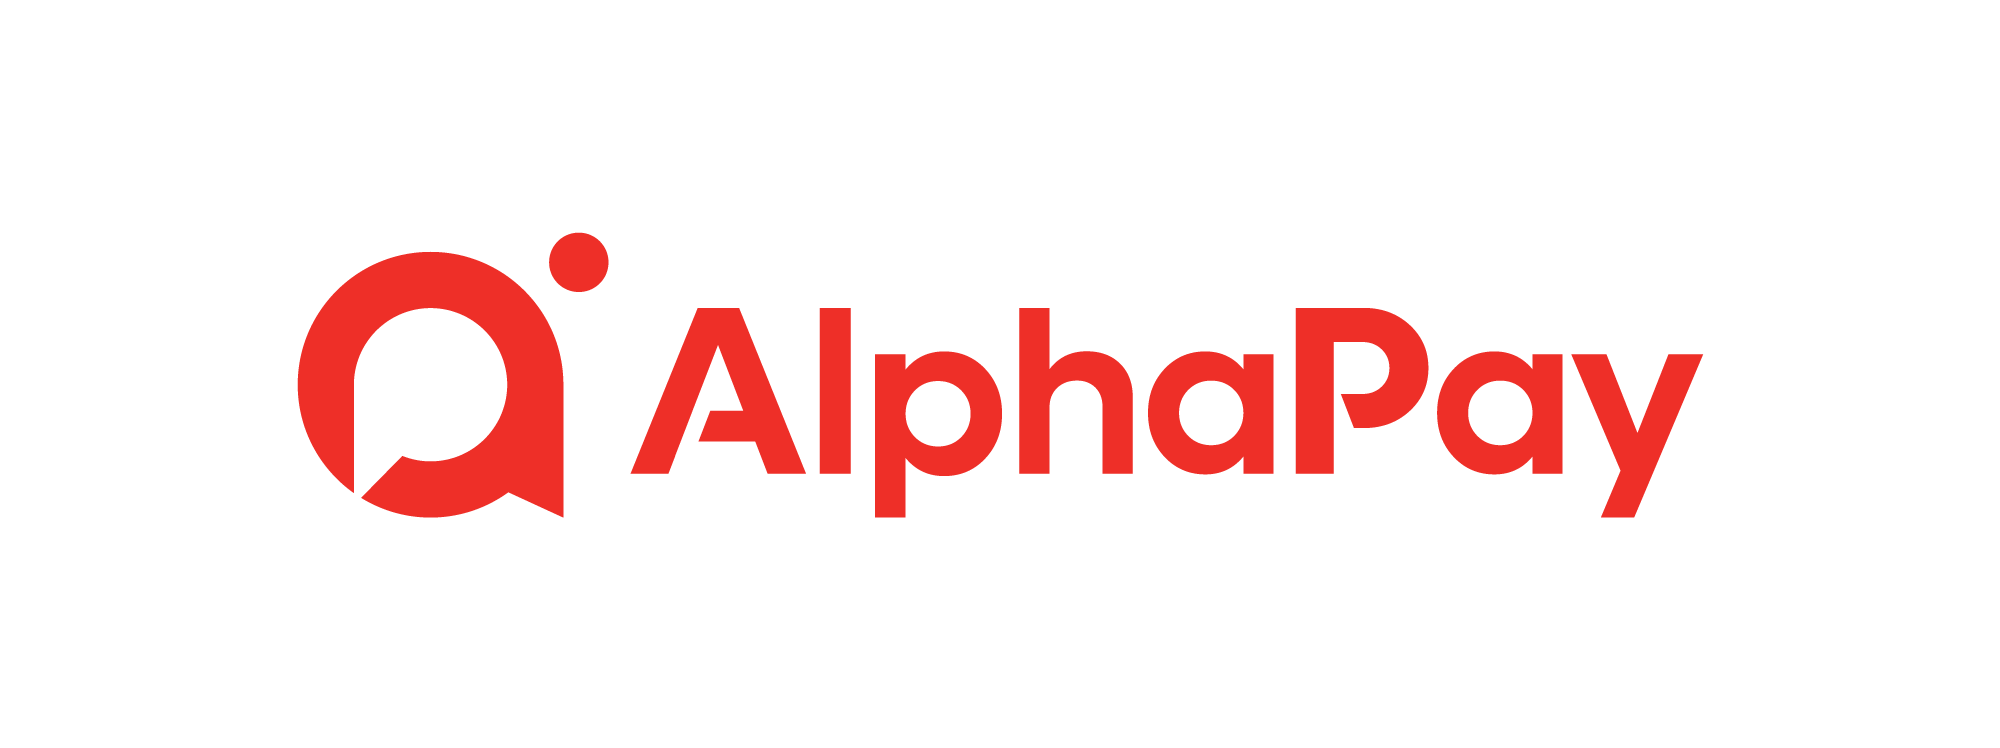 AlphaPayNews Logo